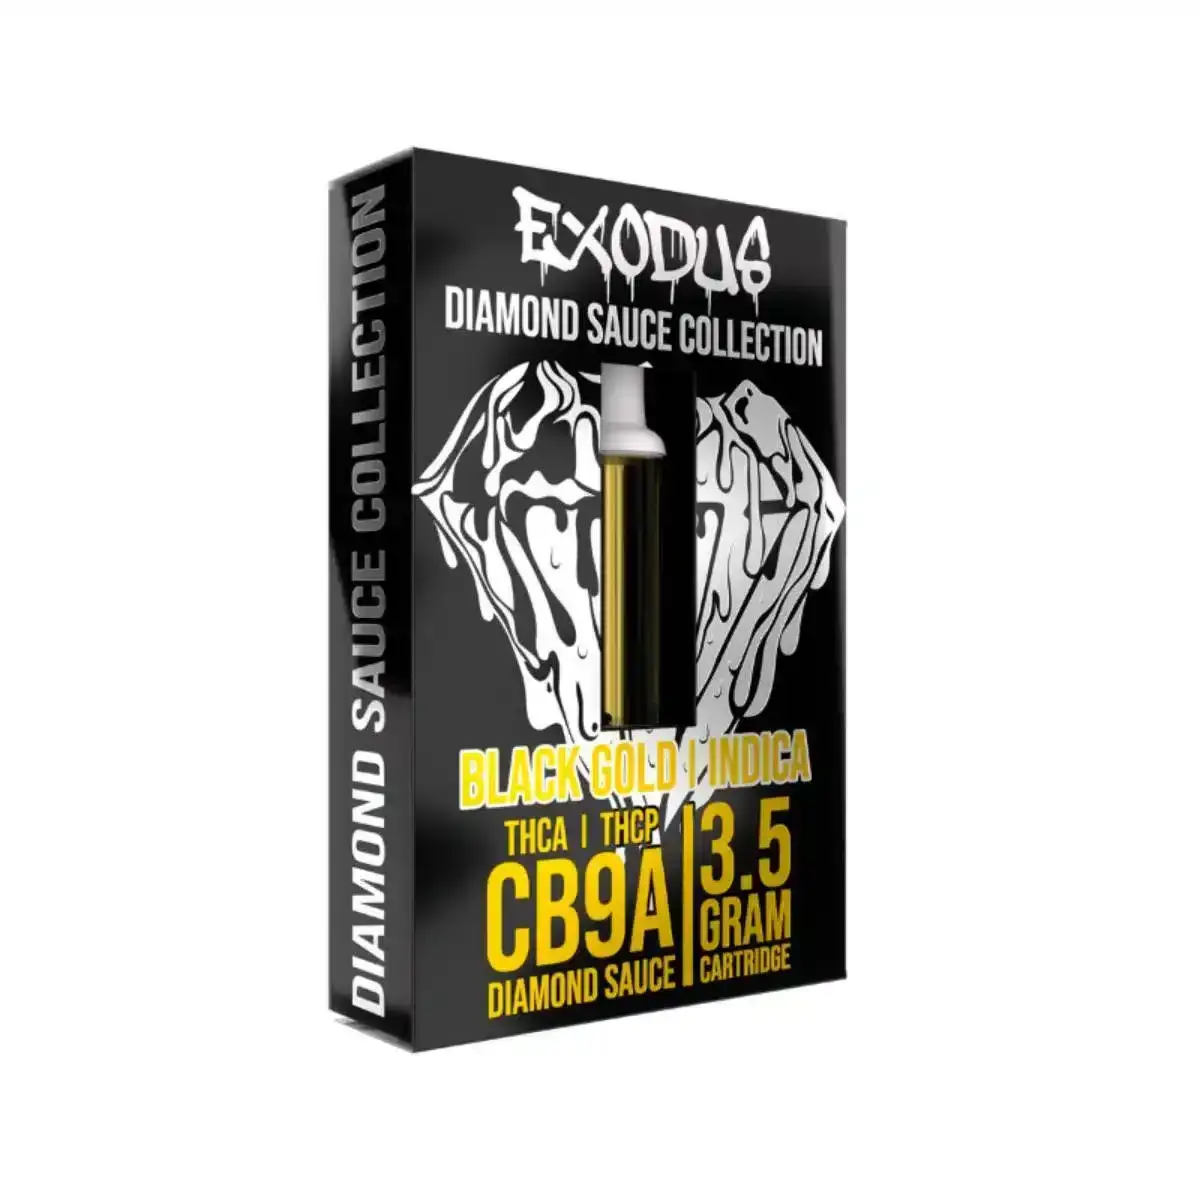 Image of Exodus Diamond Sauce Collection CB9A Cartridges 3.5g